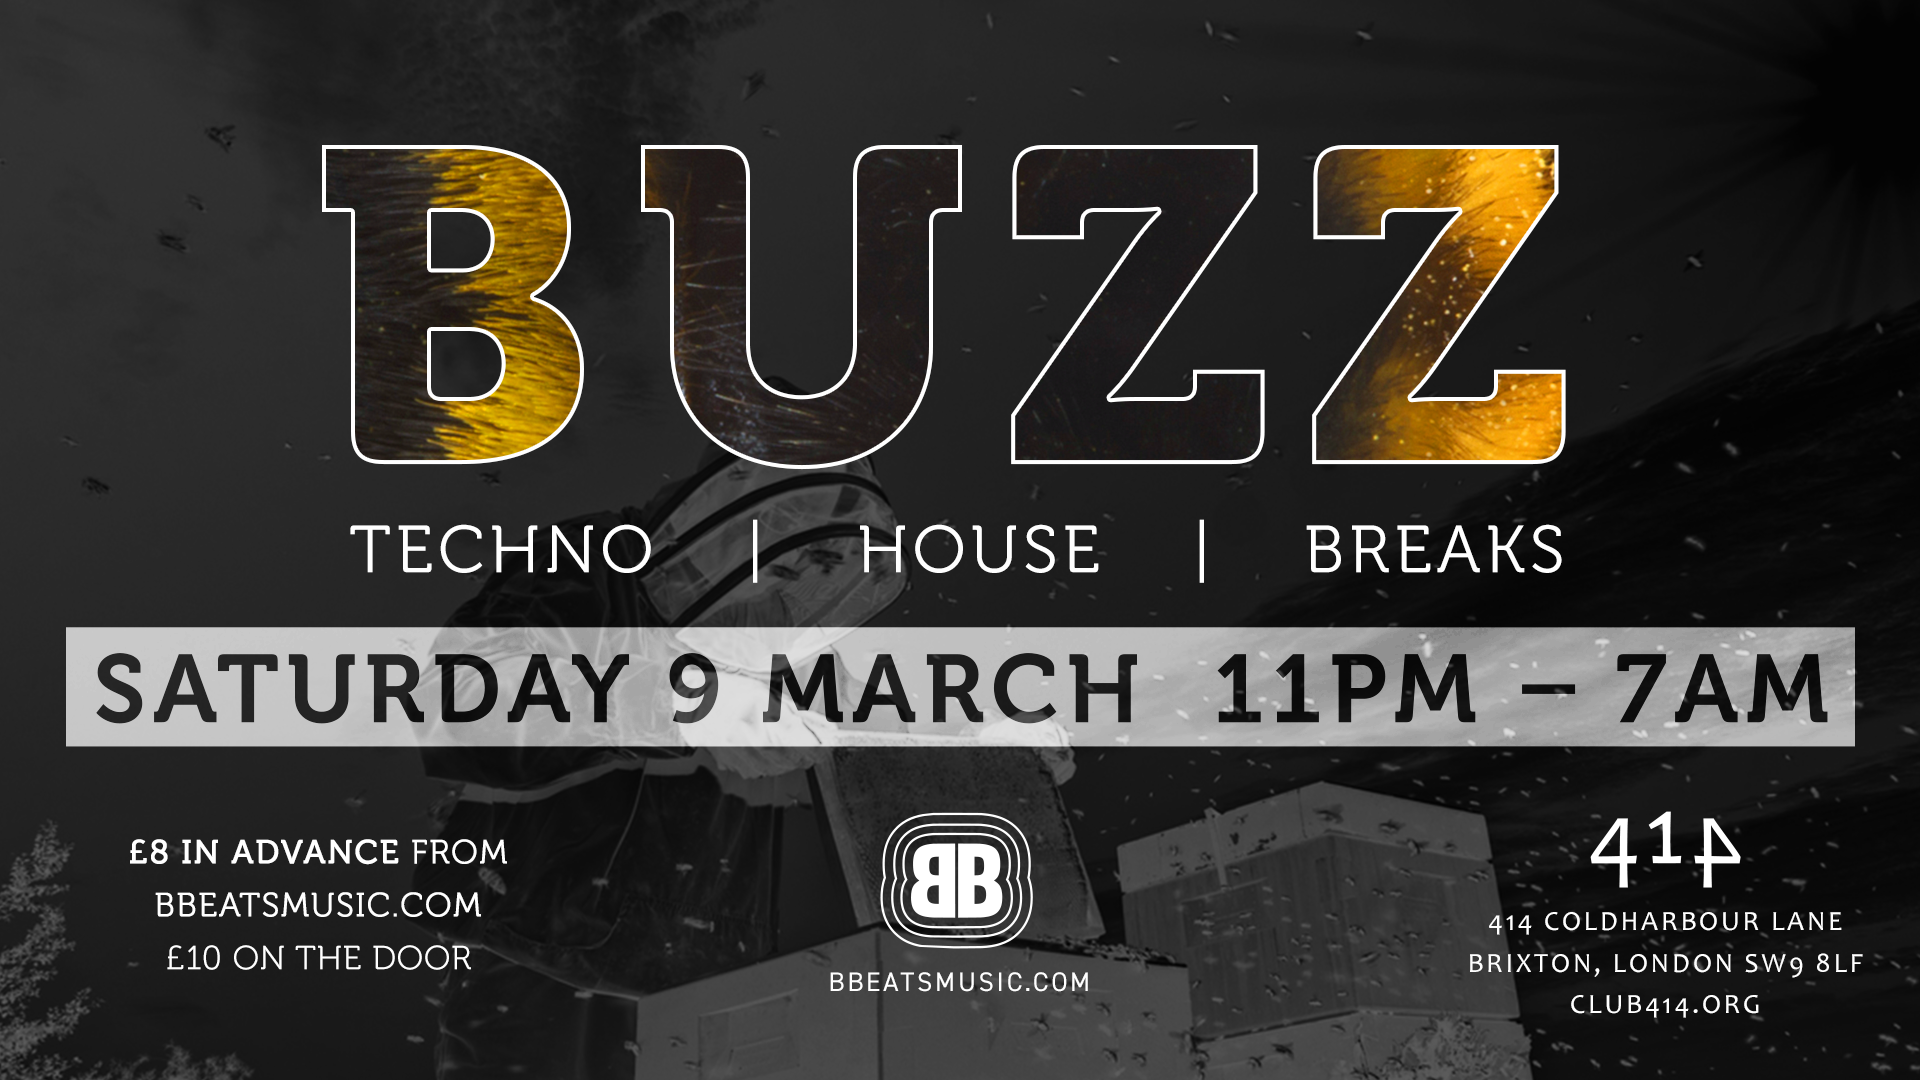 BUZZ and Club 414 Brixton flyer